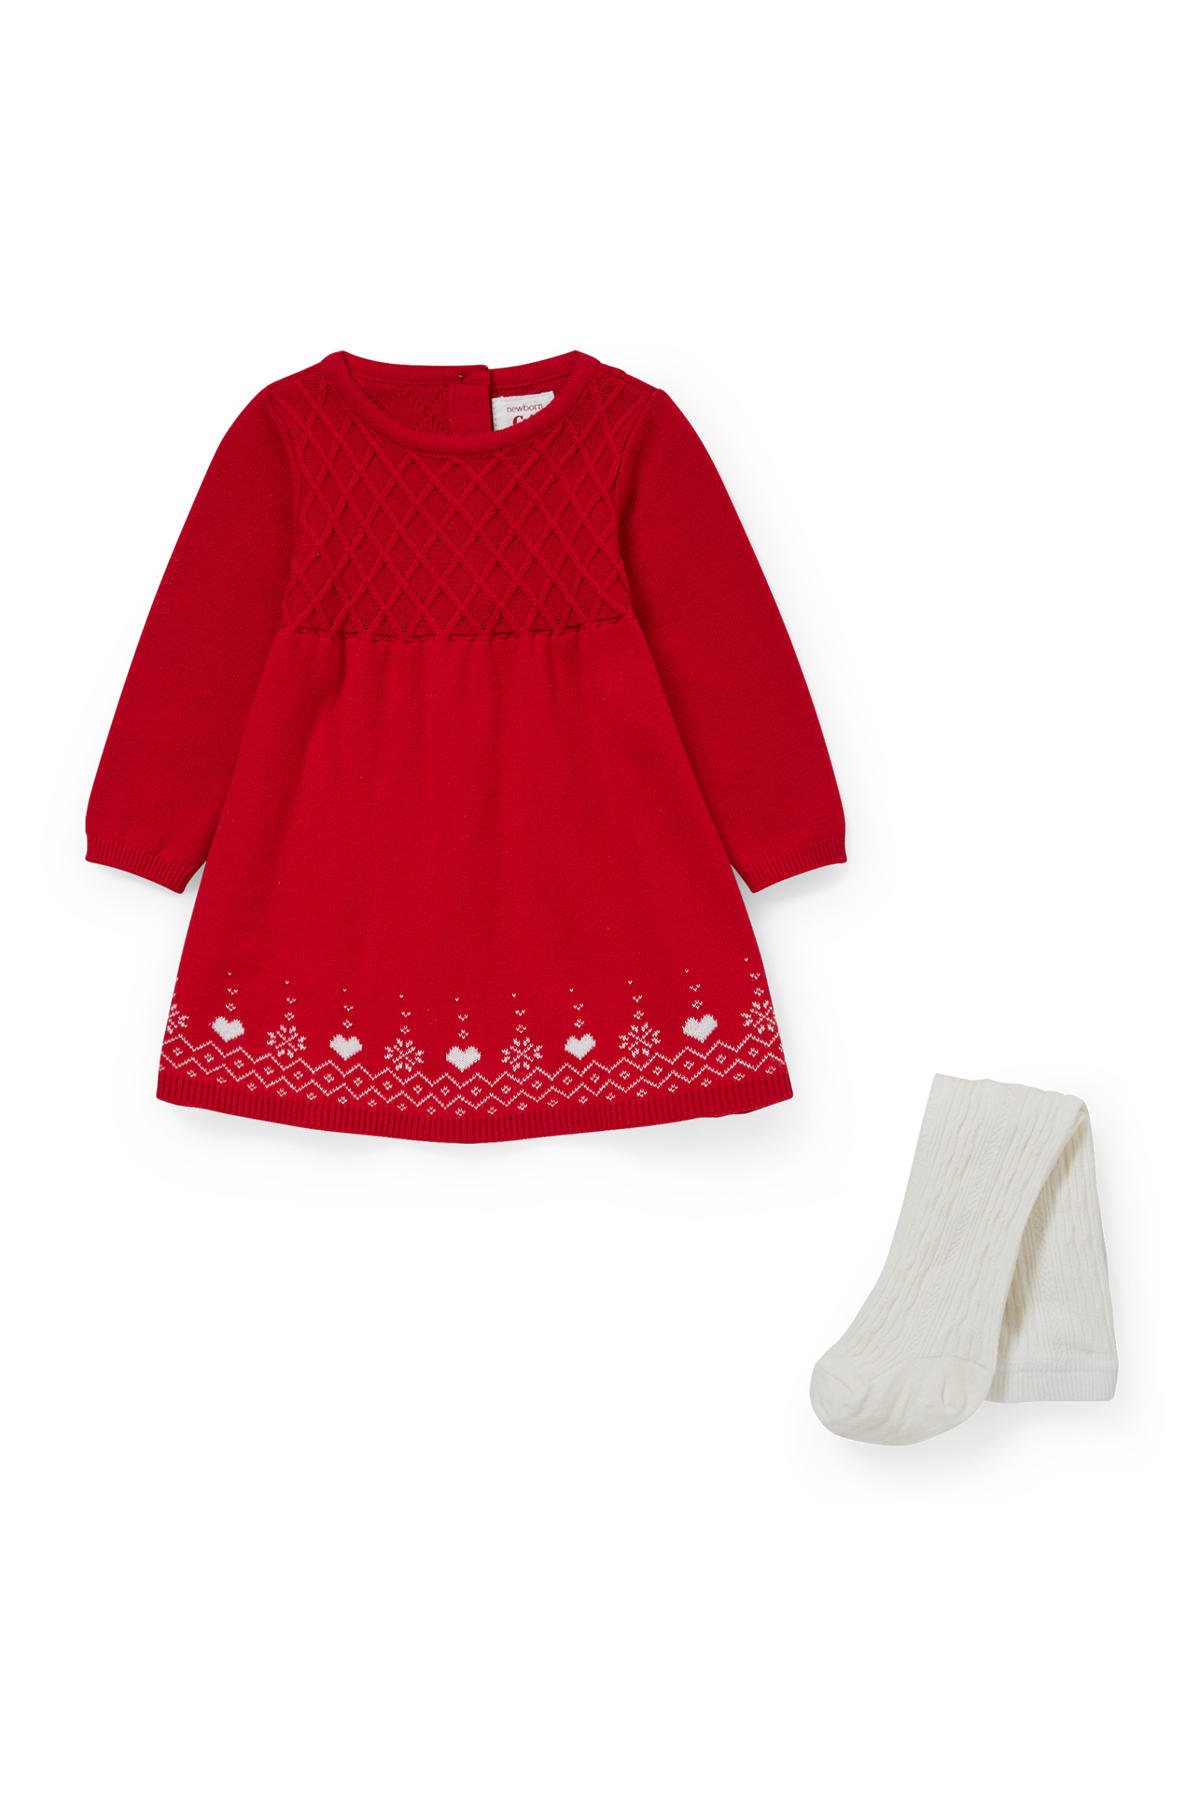 C&A Baby Newborn Kerst jurk + rood/ecru | wehkamp